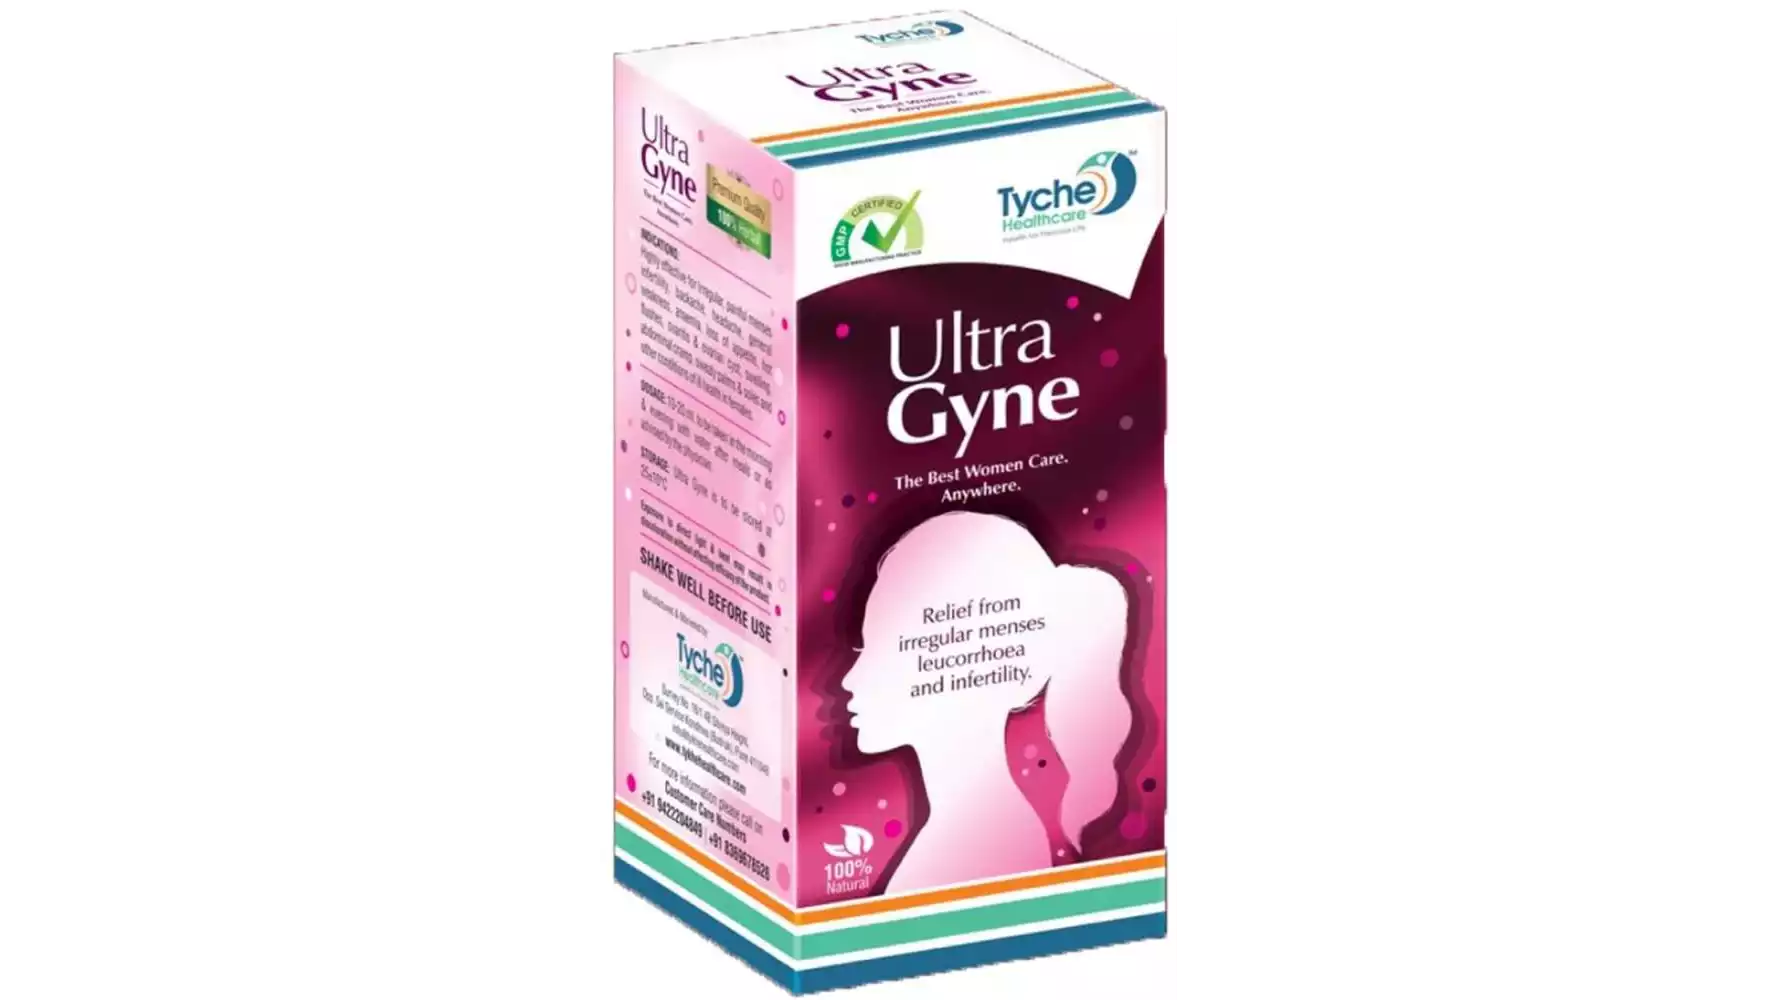 Tykhe Ultra Gyne Syrup (200ml)